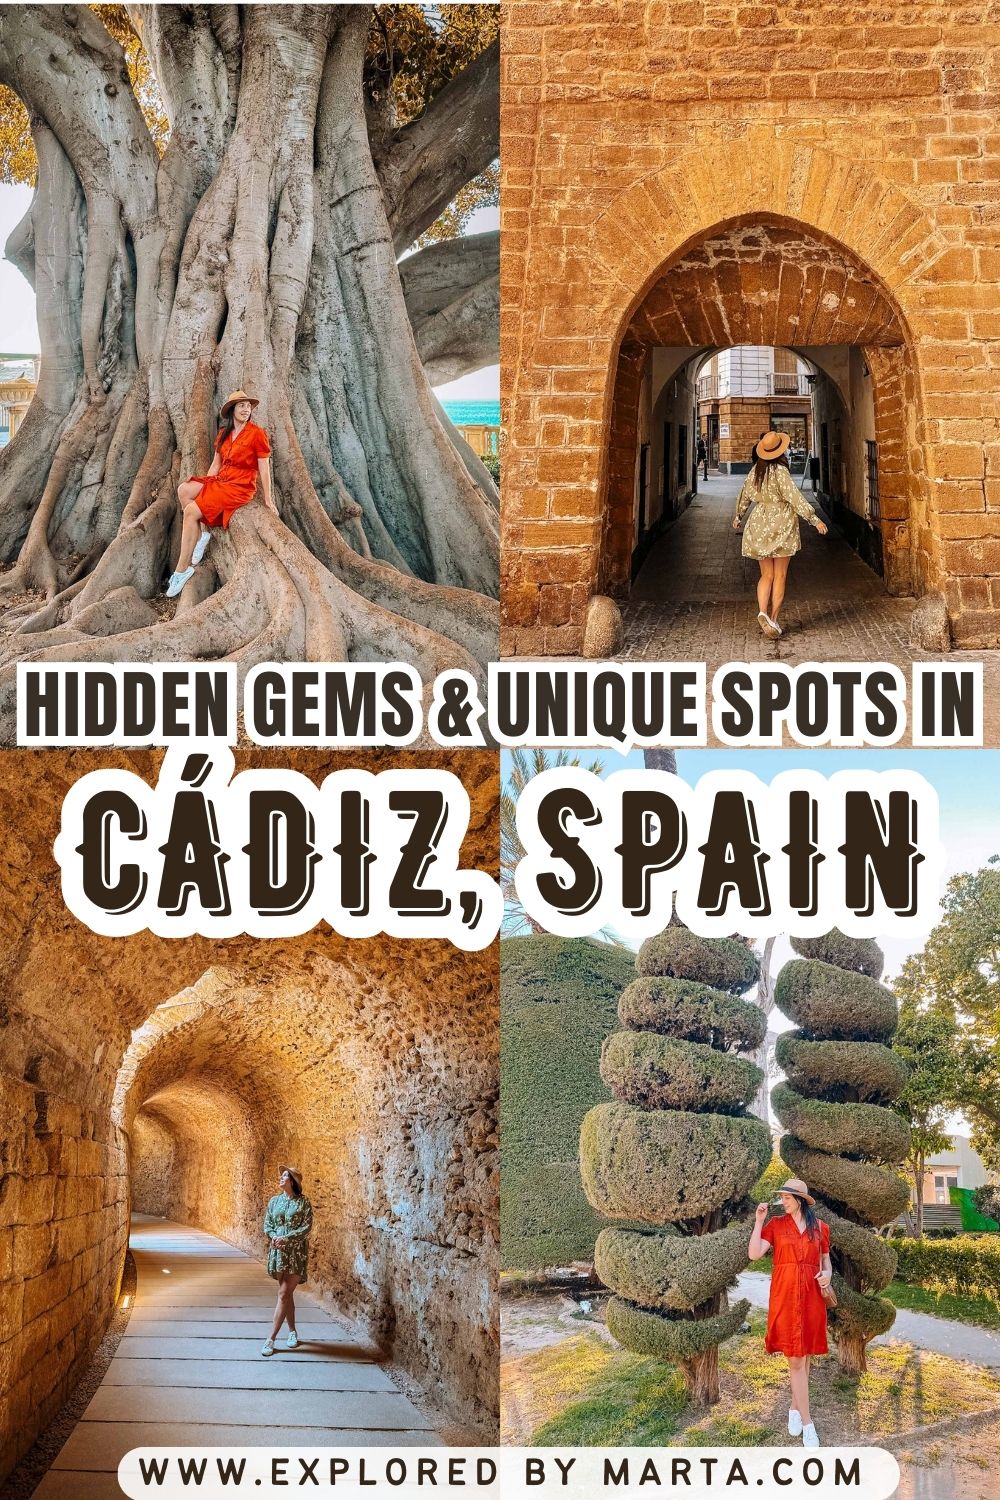 Must-visit hidden gems and unique spots in Cadiz, Spain